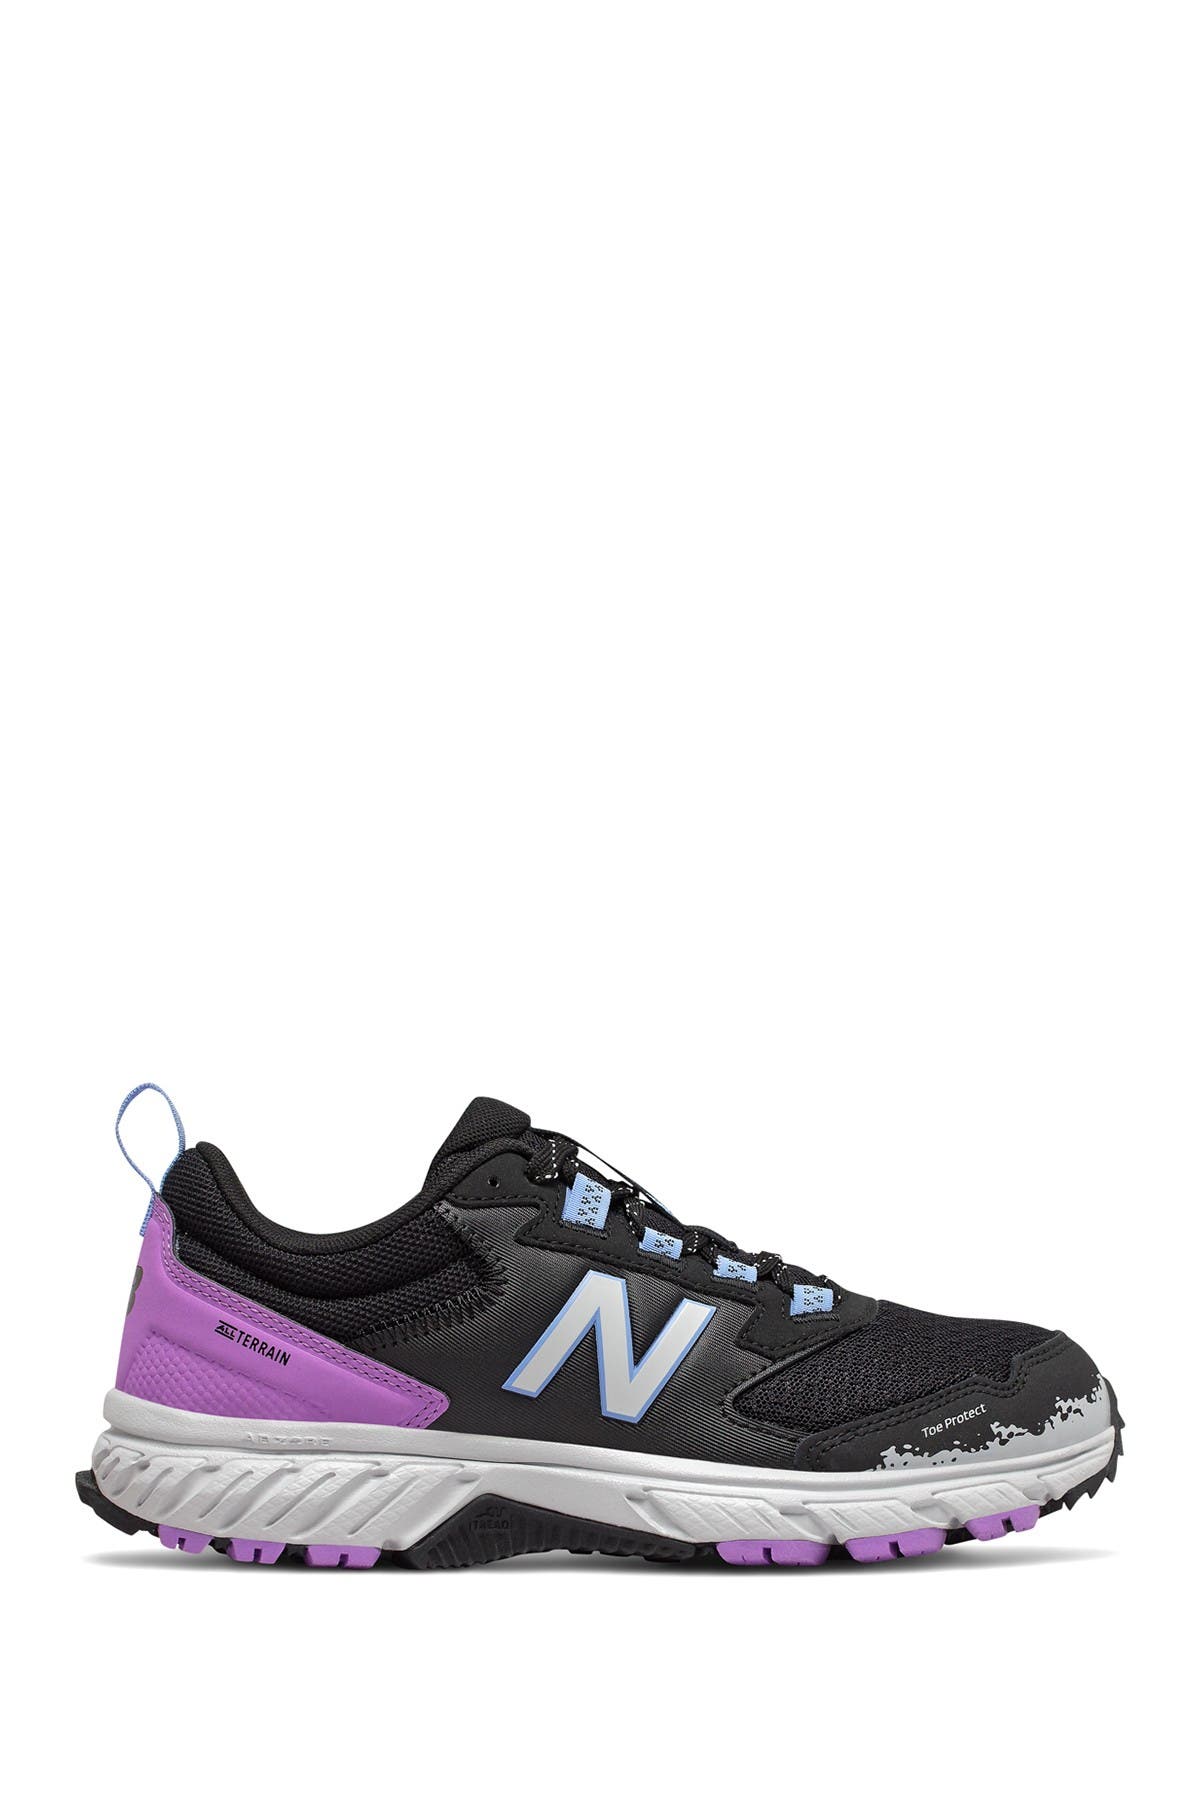 NITREL v5 Trail Running Shoe 